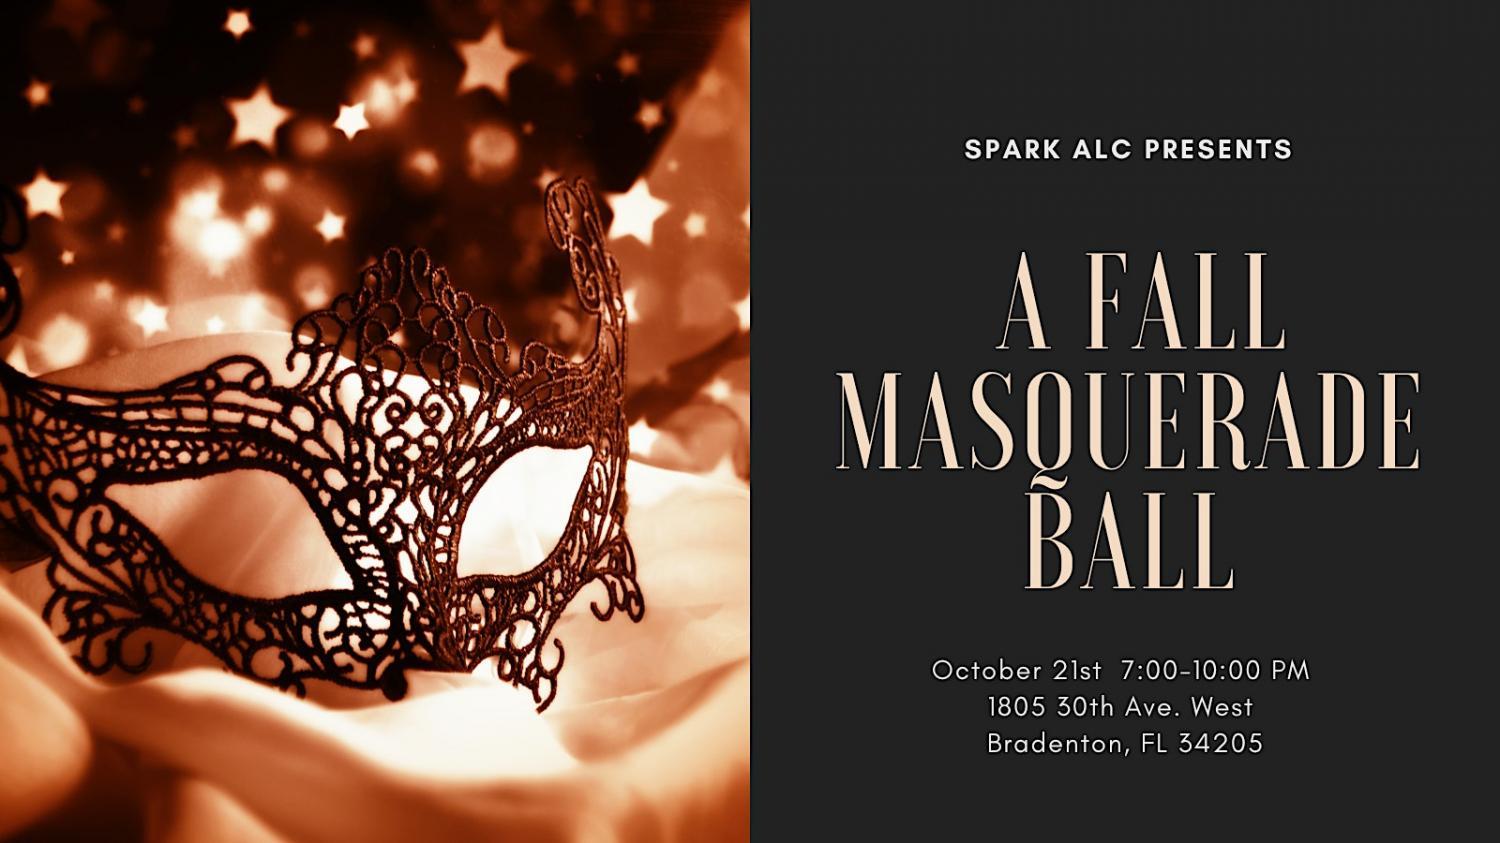 A Fall Masquerade Ball
Fri Oct 21, 7:00 PM - Fri Oct 21, 10:00 PM
in 2 days